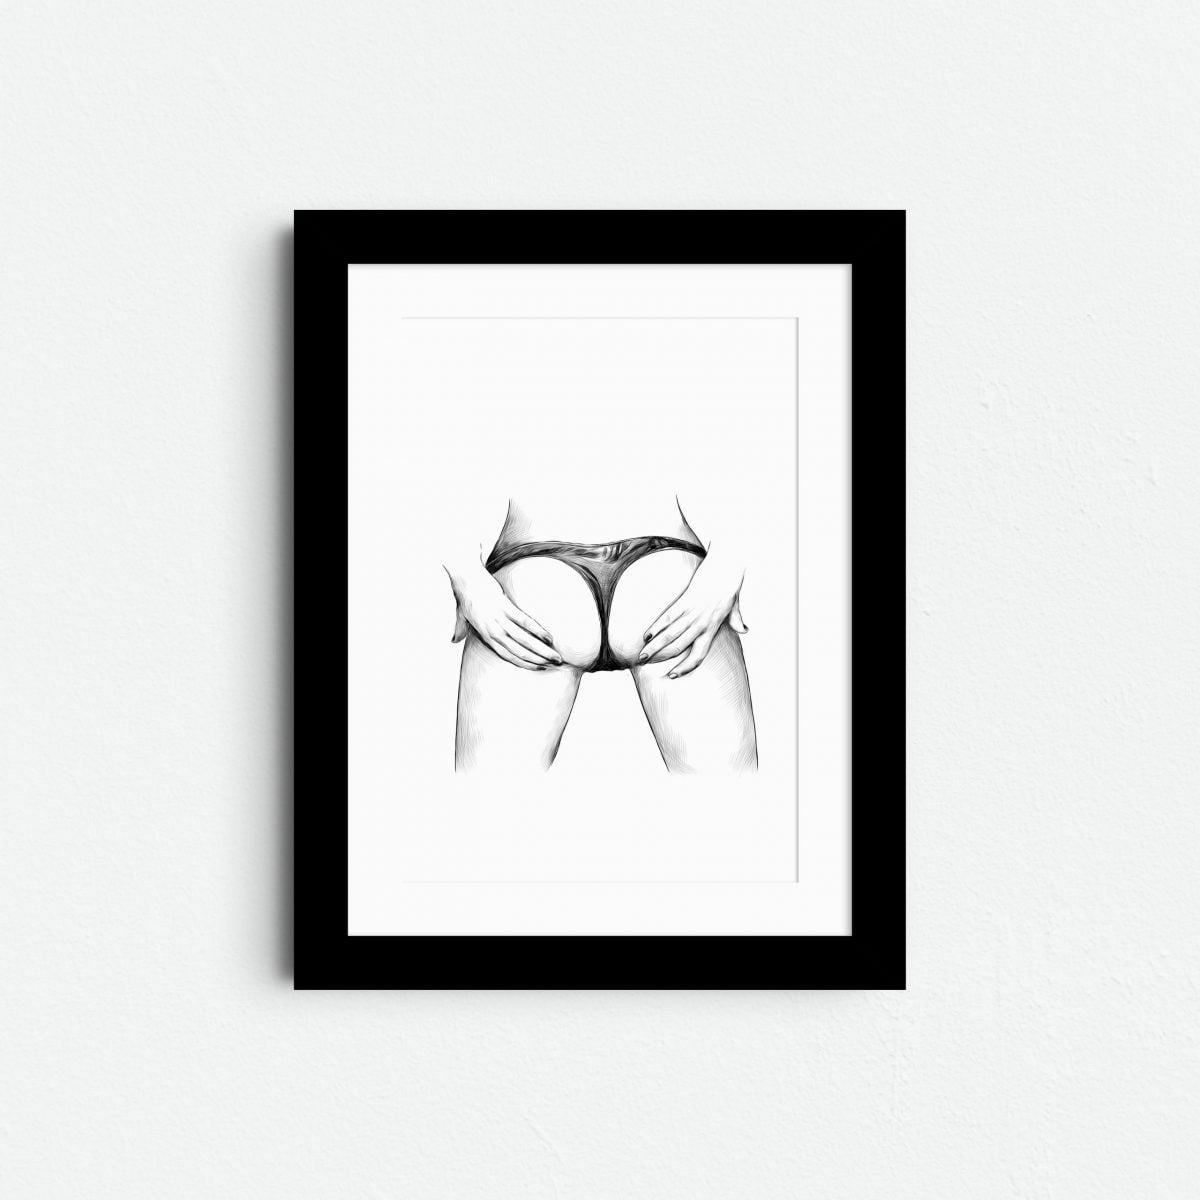 spread-nude-erotic-wall-art-prints-framed-portrait